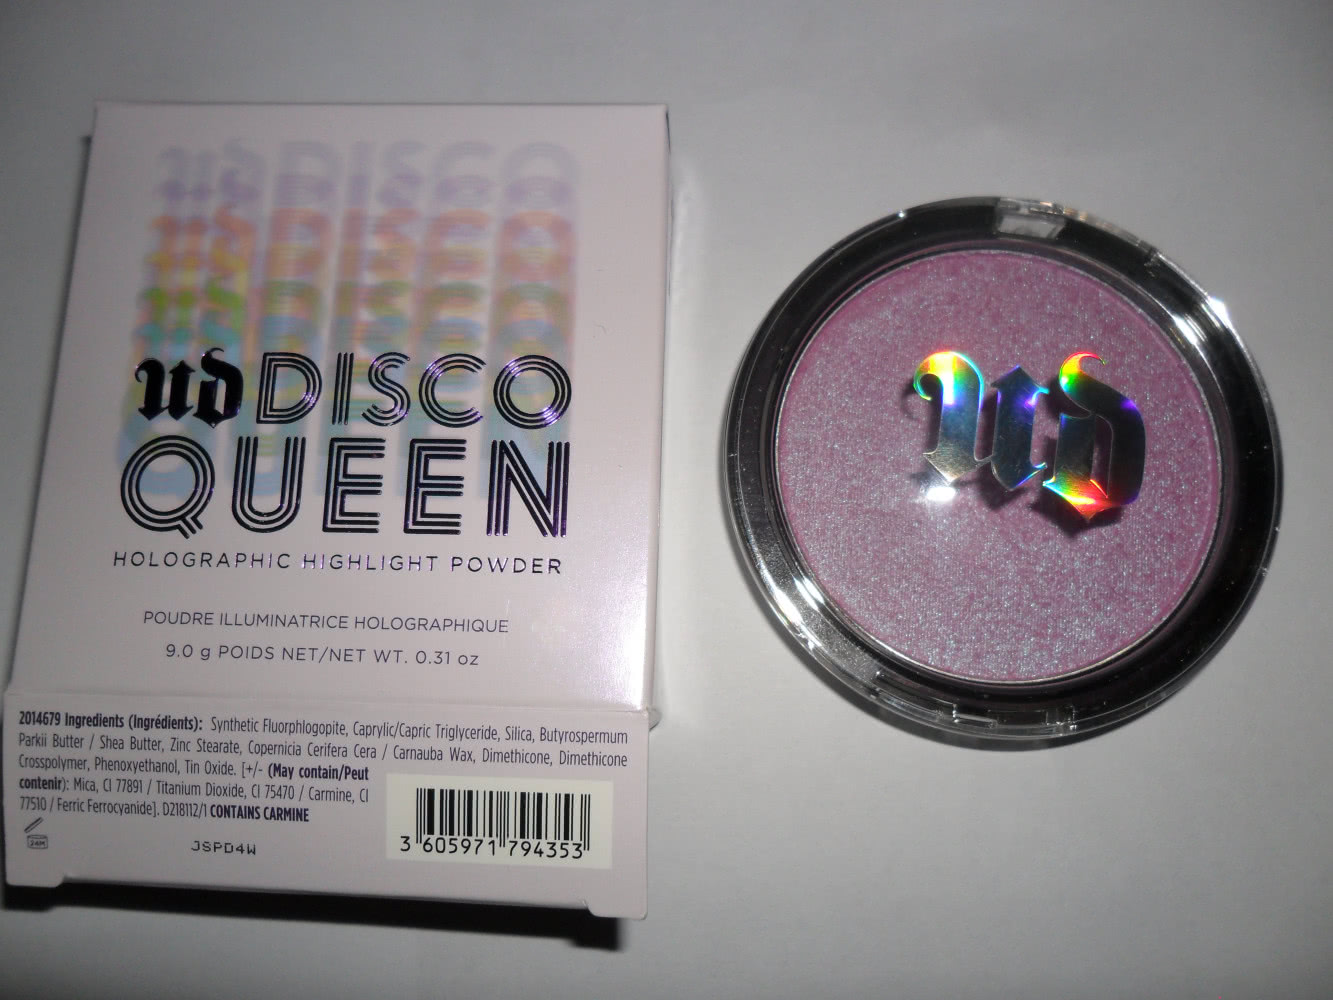 URBAN DECAY Disco Queen Holographic